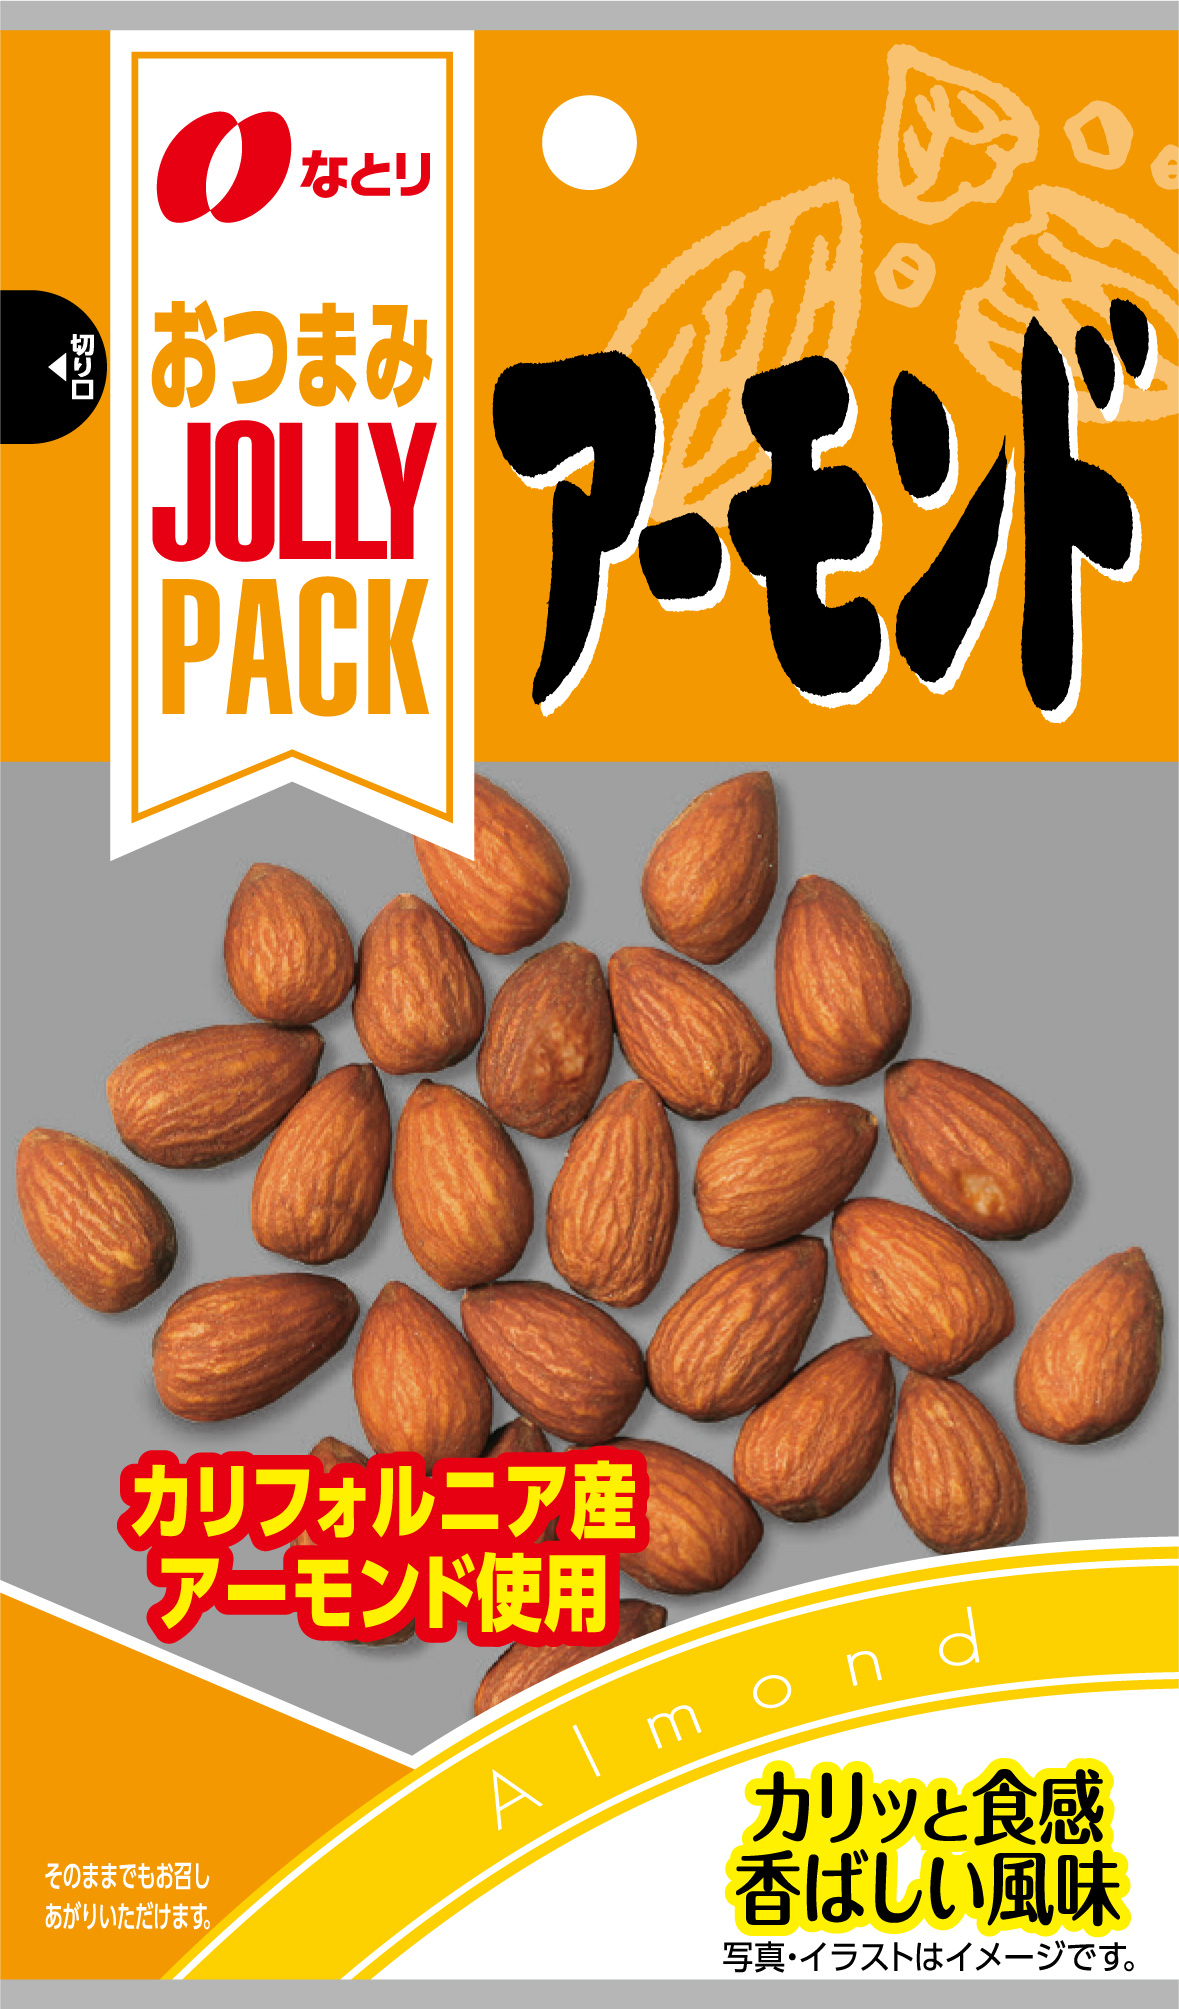 JOLLY PACK　Almond